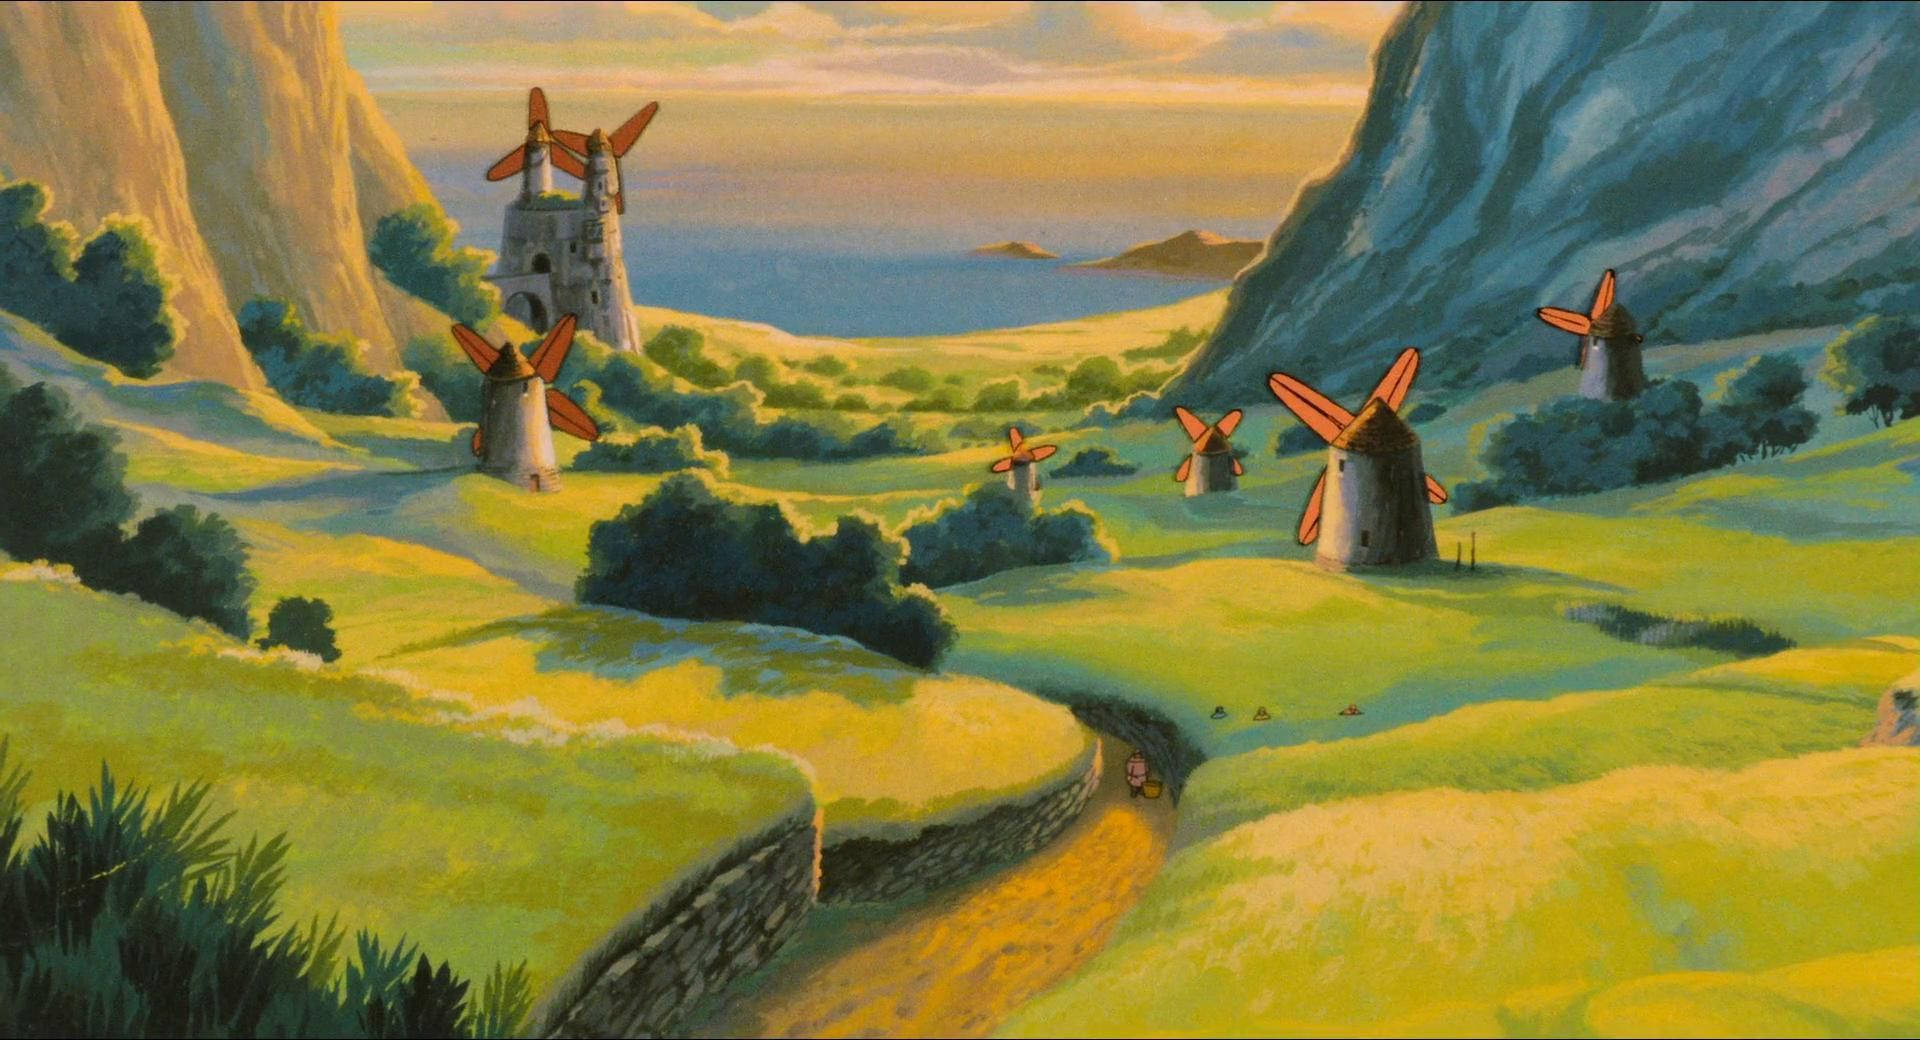 Studio Ghibli Scenery With Windmills Wallpaper